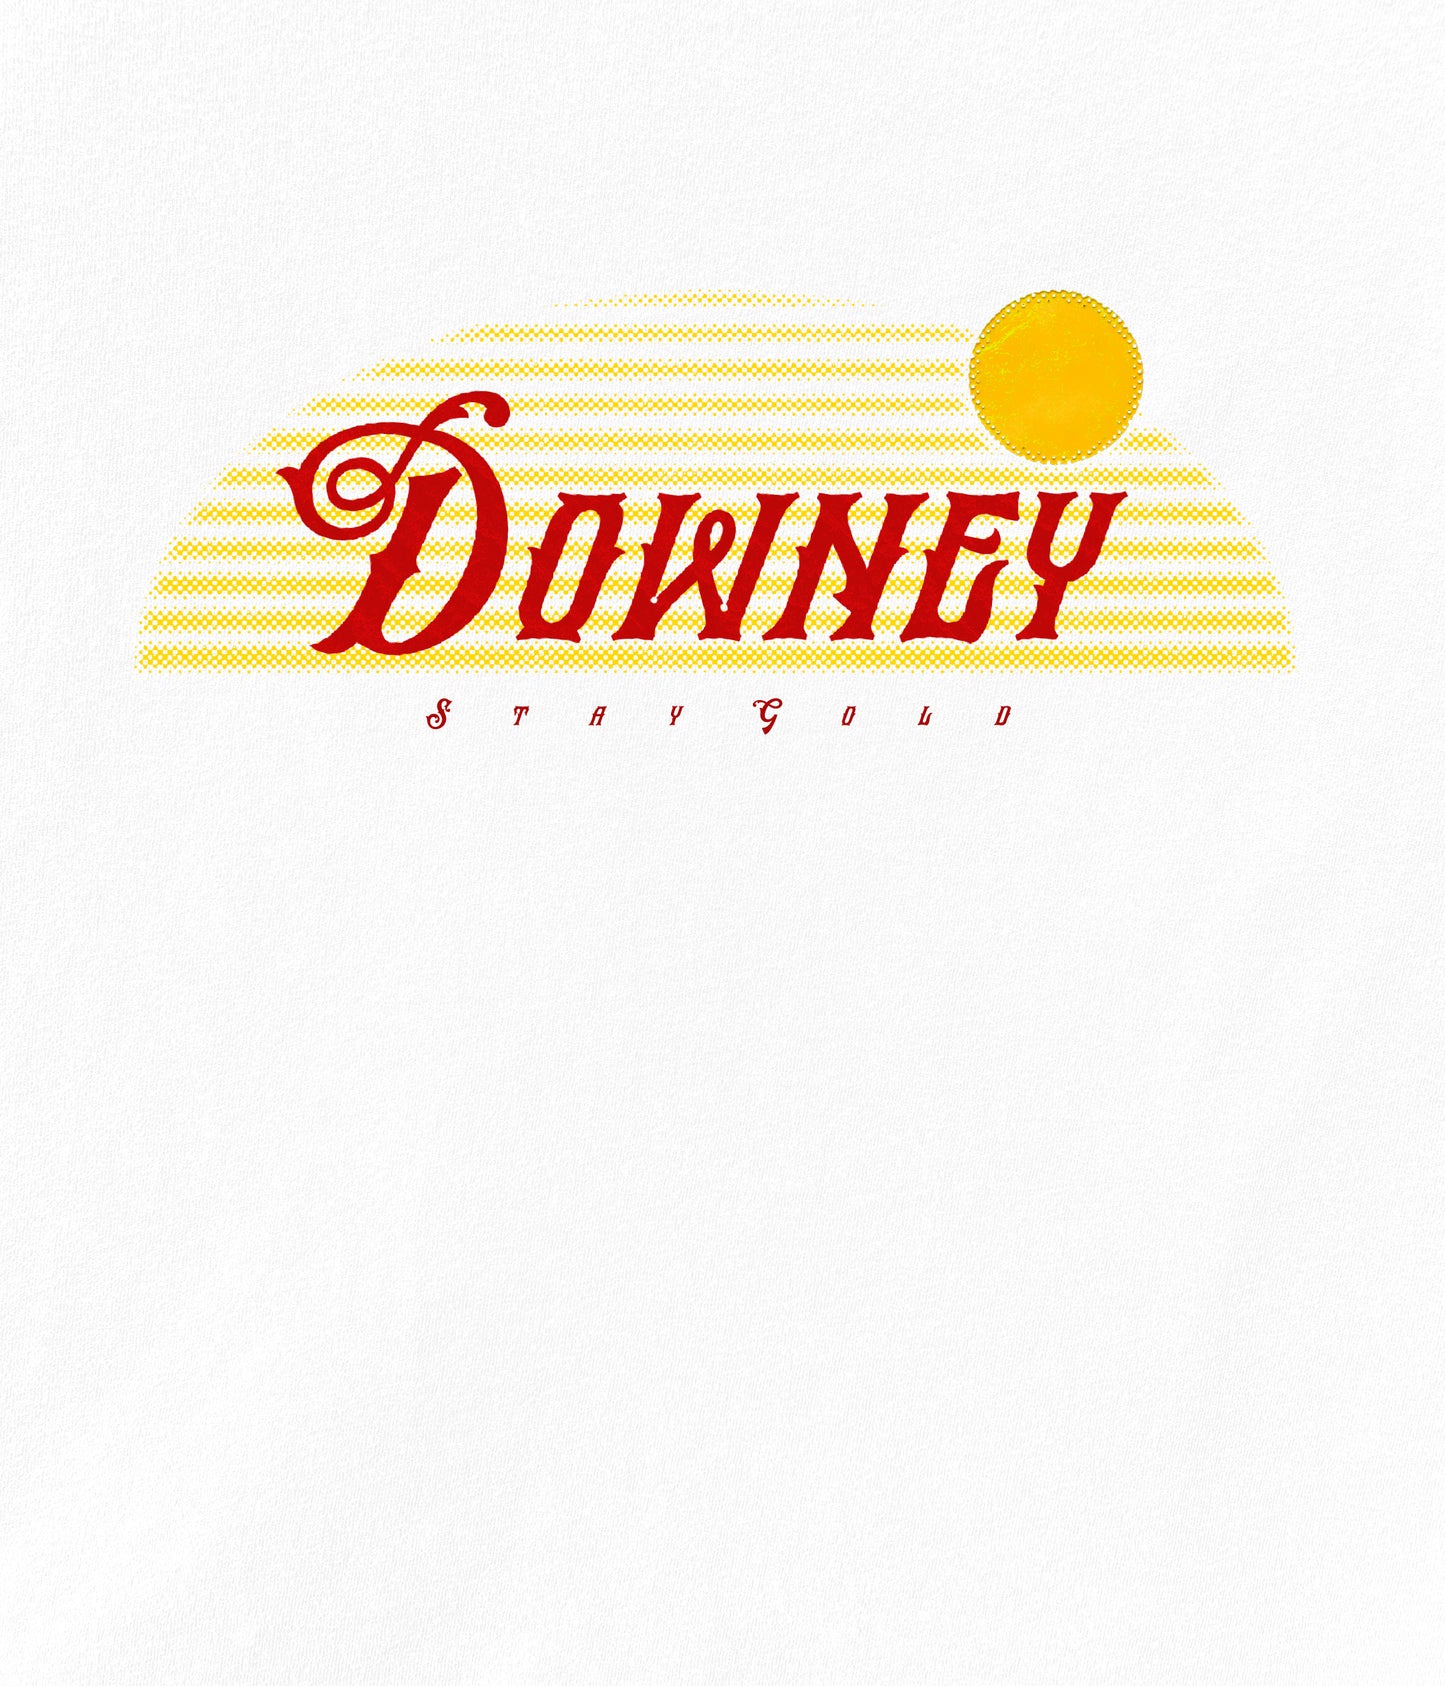 Downey Stay Gold Crewneck Sweatshirt